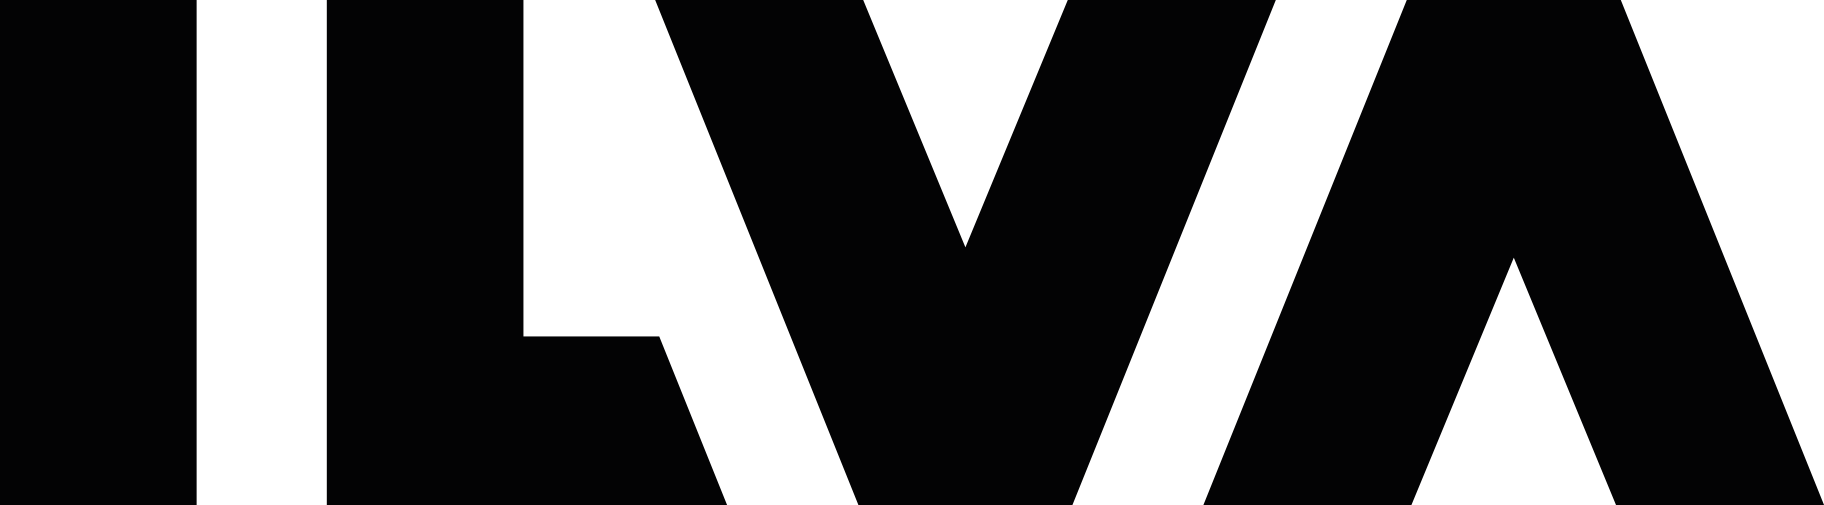 ILVA Logo